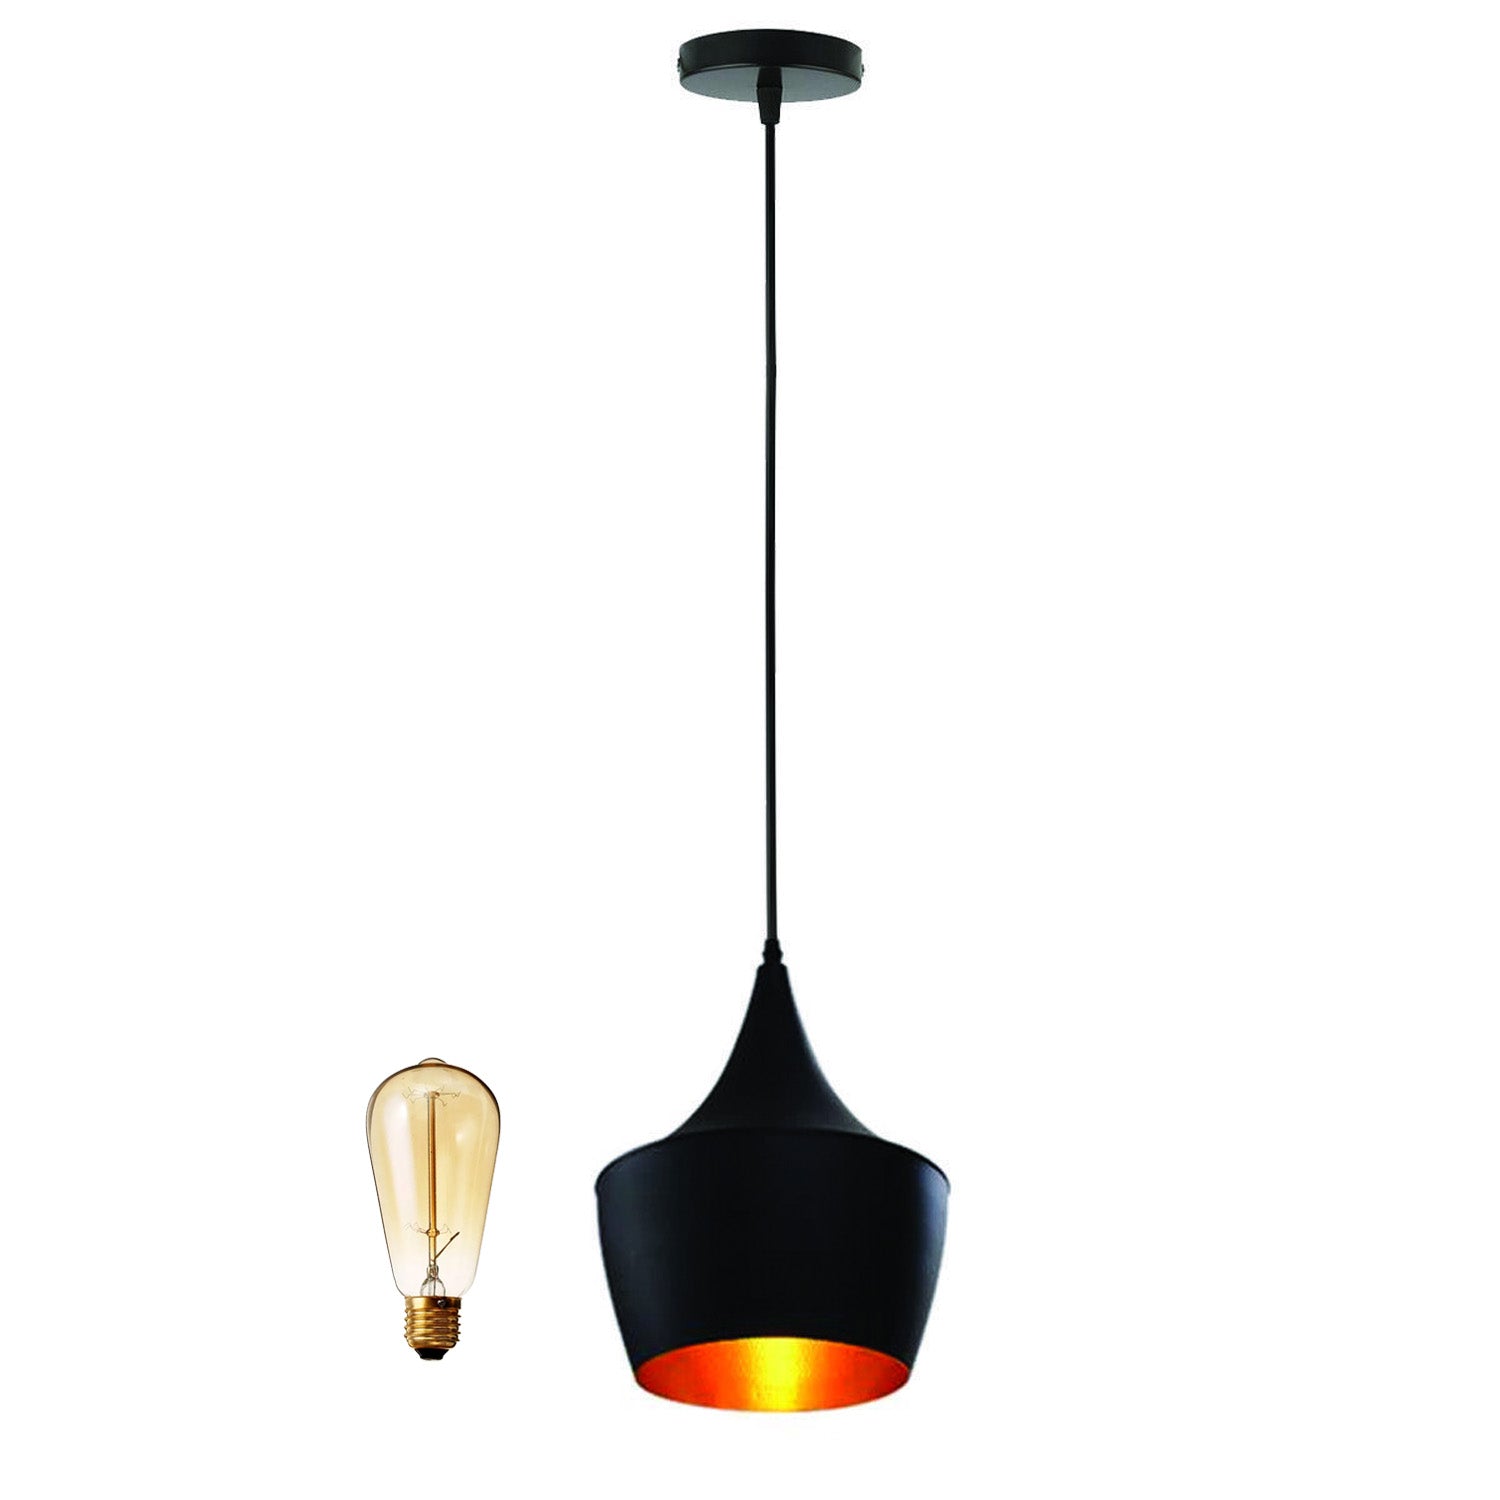 Retro industrial hanging lamp pendant lamp bar lampshade lamp E27 black new~2185 - LEDSone UK Ltd